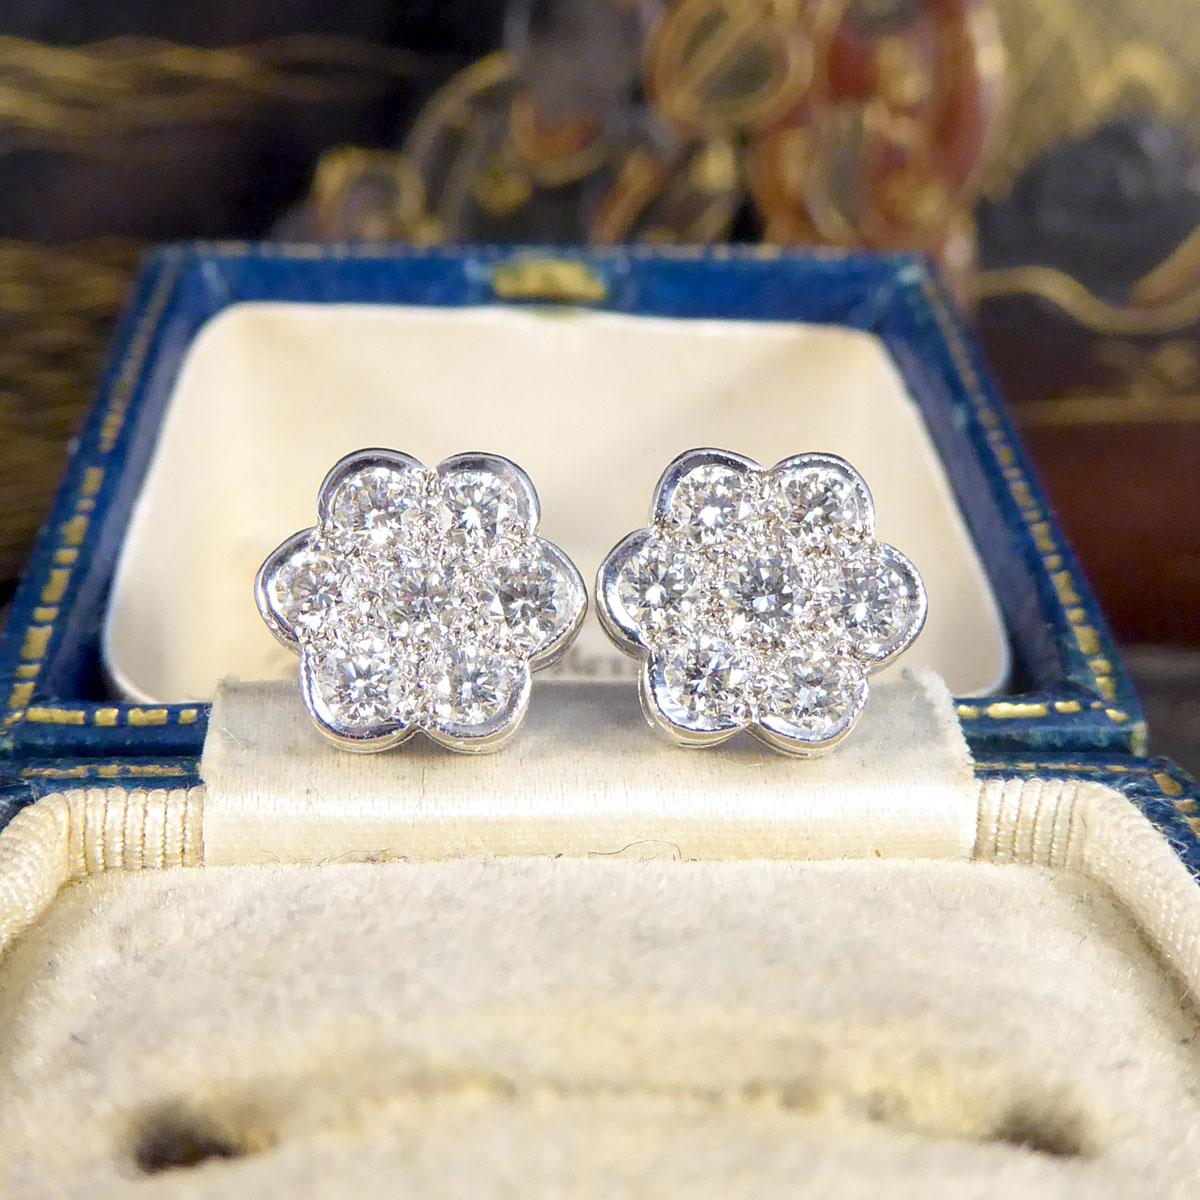 Edwardian Style Daisy Cluster Diamond Earrings in 18 Carat White Gold For Sale 3